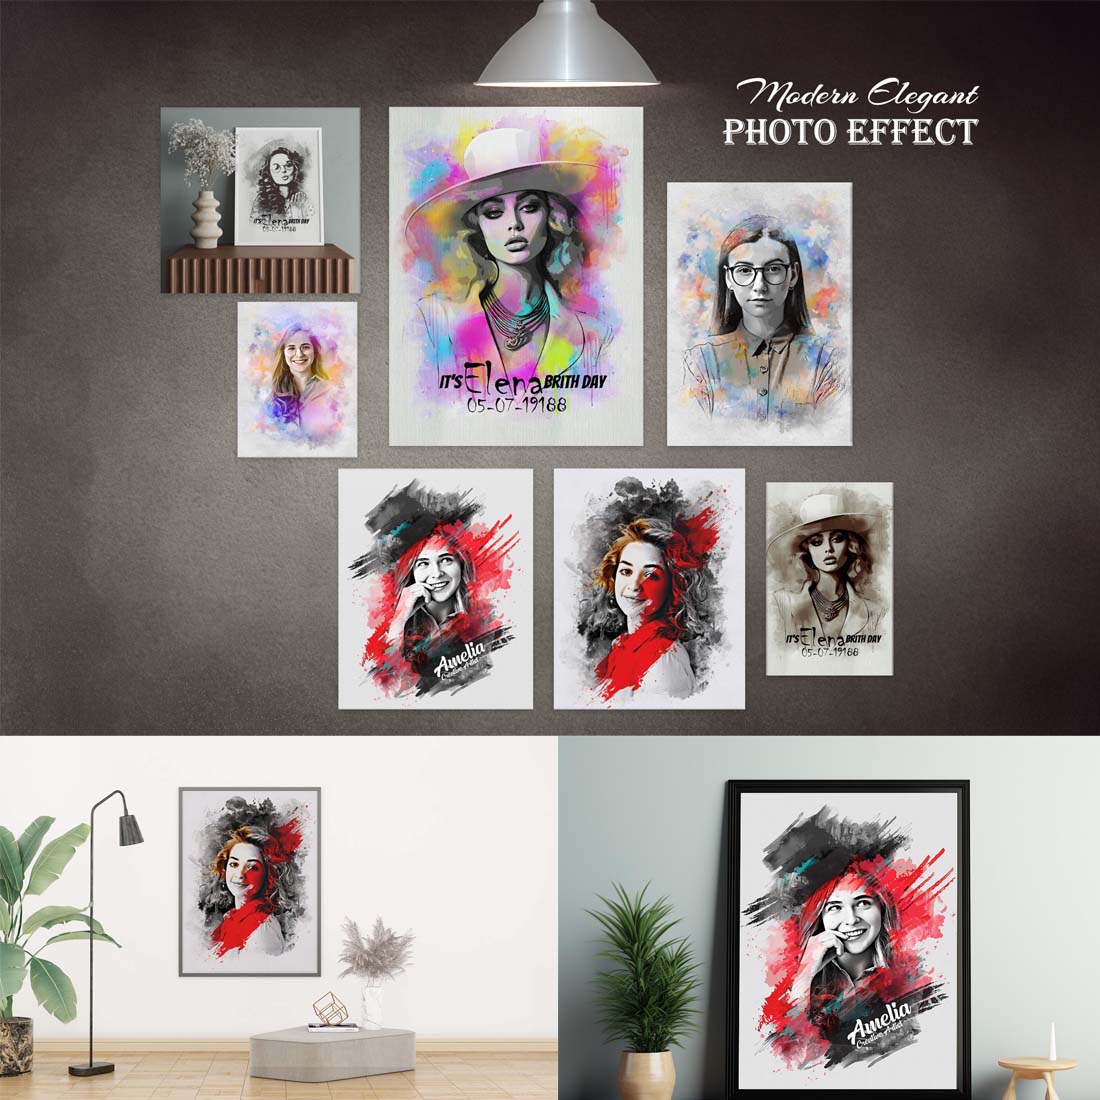 Modern Elegant Photo Effect cover image.